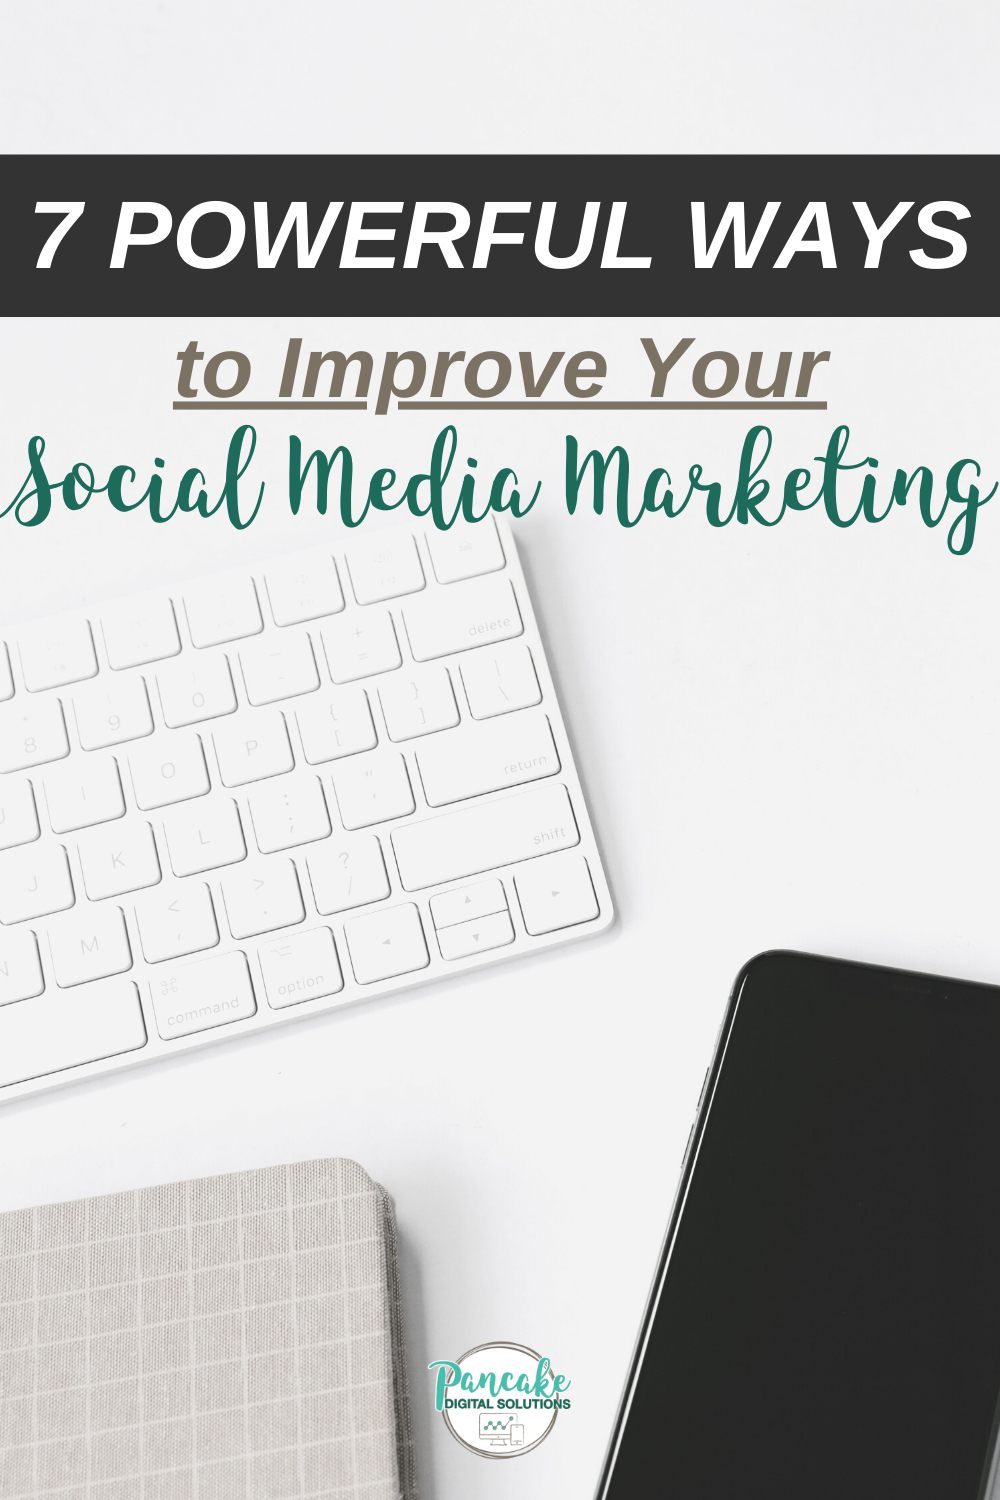 7 Powerful Ways to Improve Your Social Media Marketing